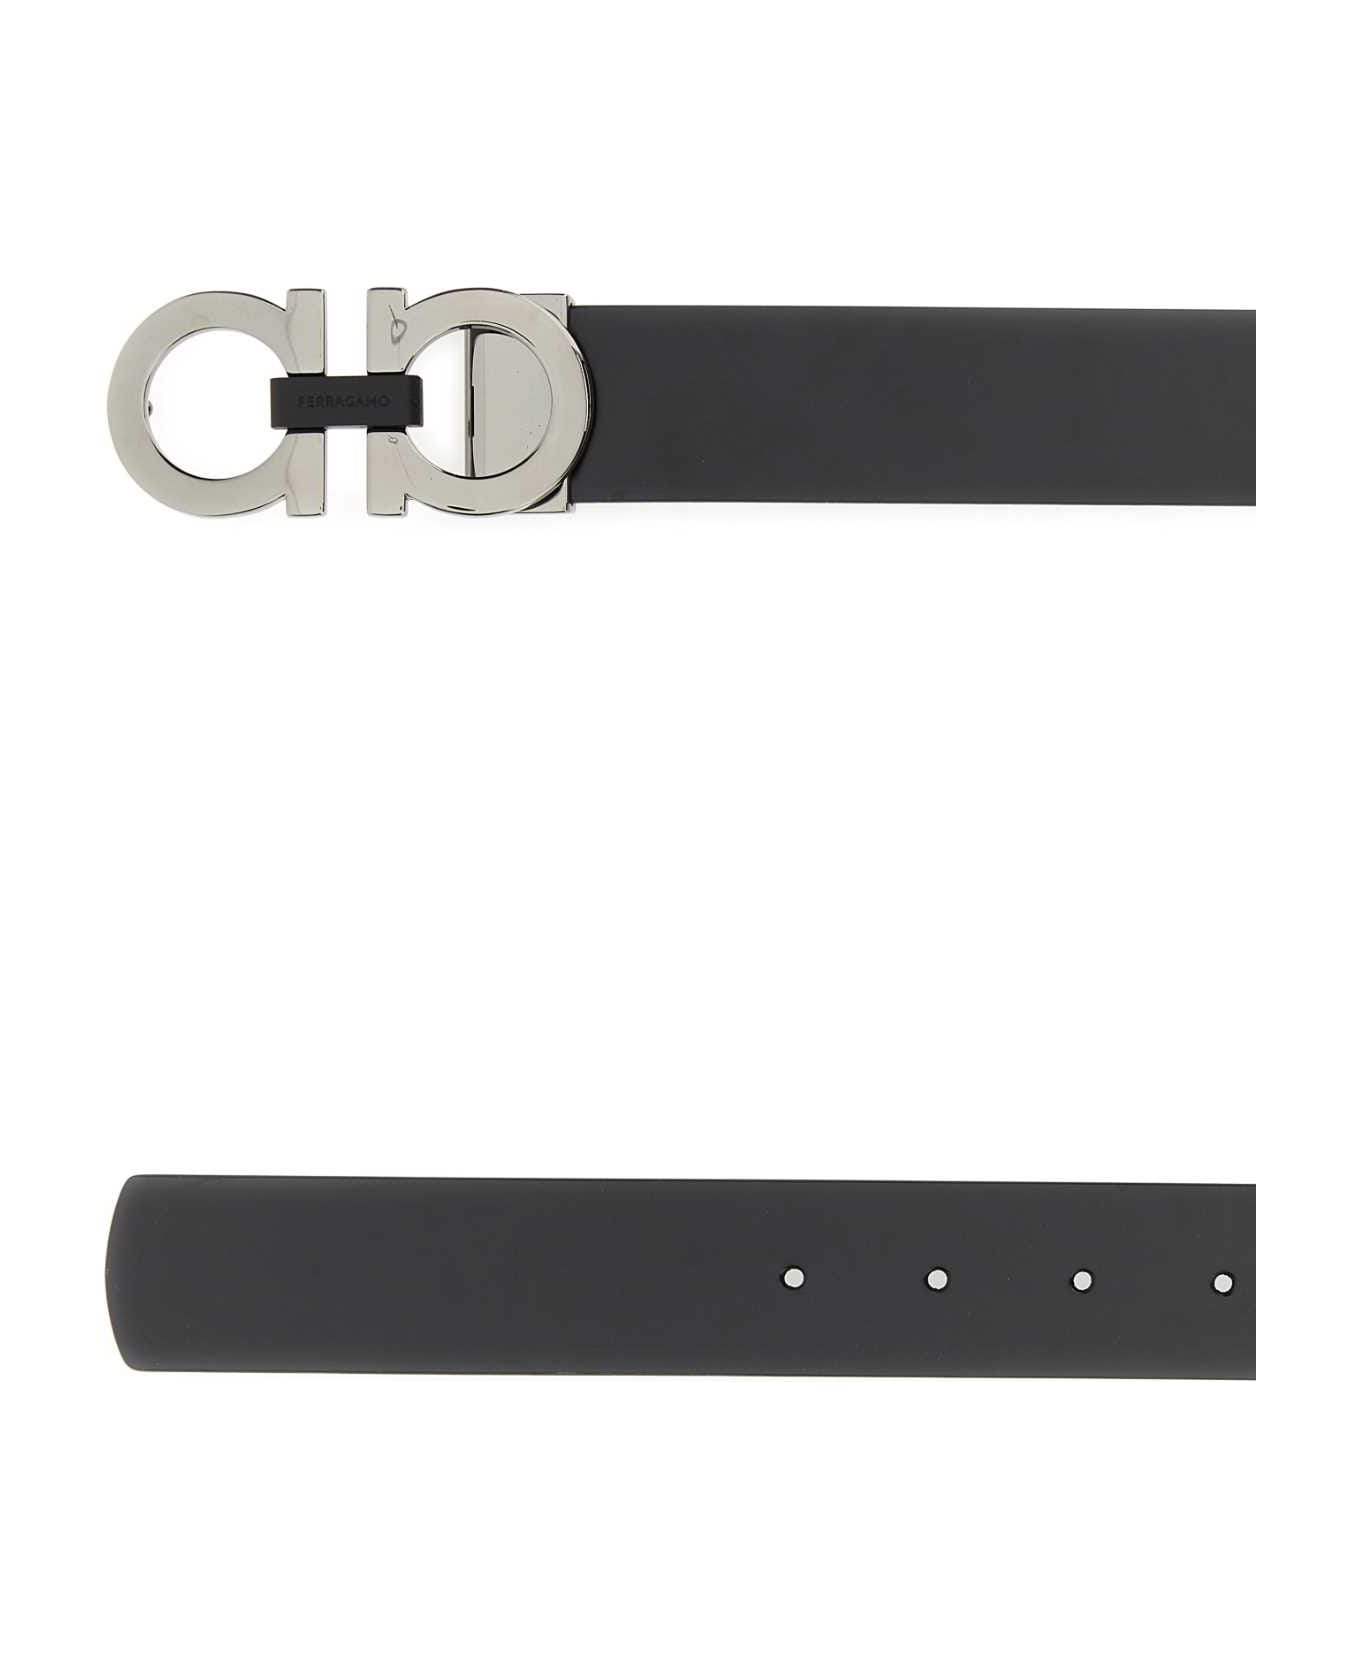 Ferragamo Black Leather Reversible Belt - NEROMIDNIGHT ベルト